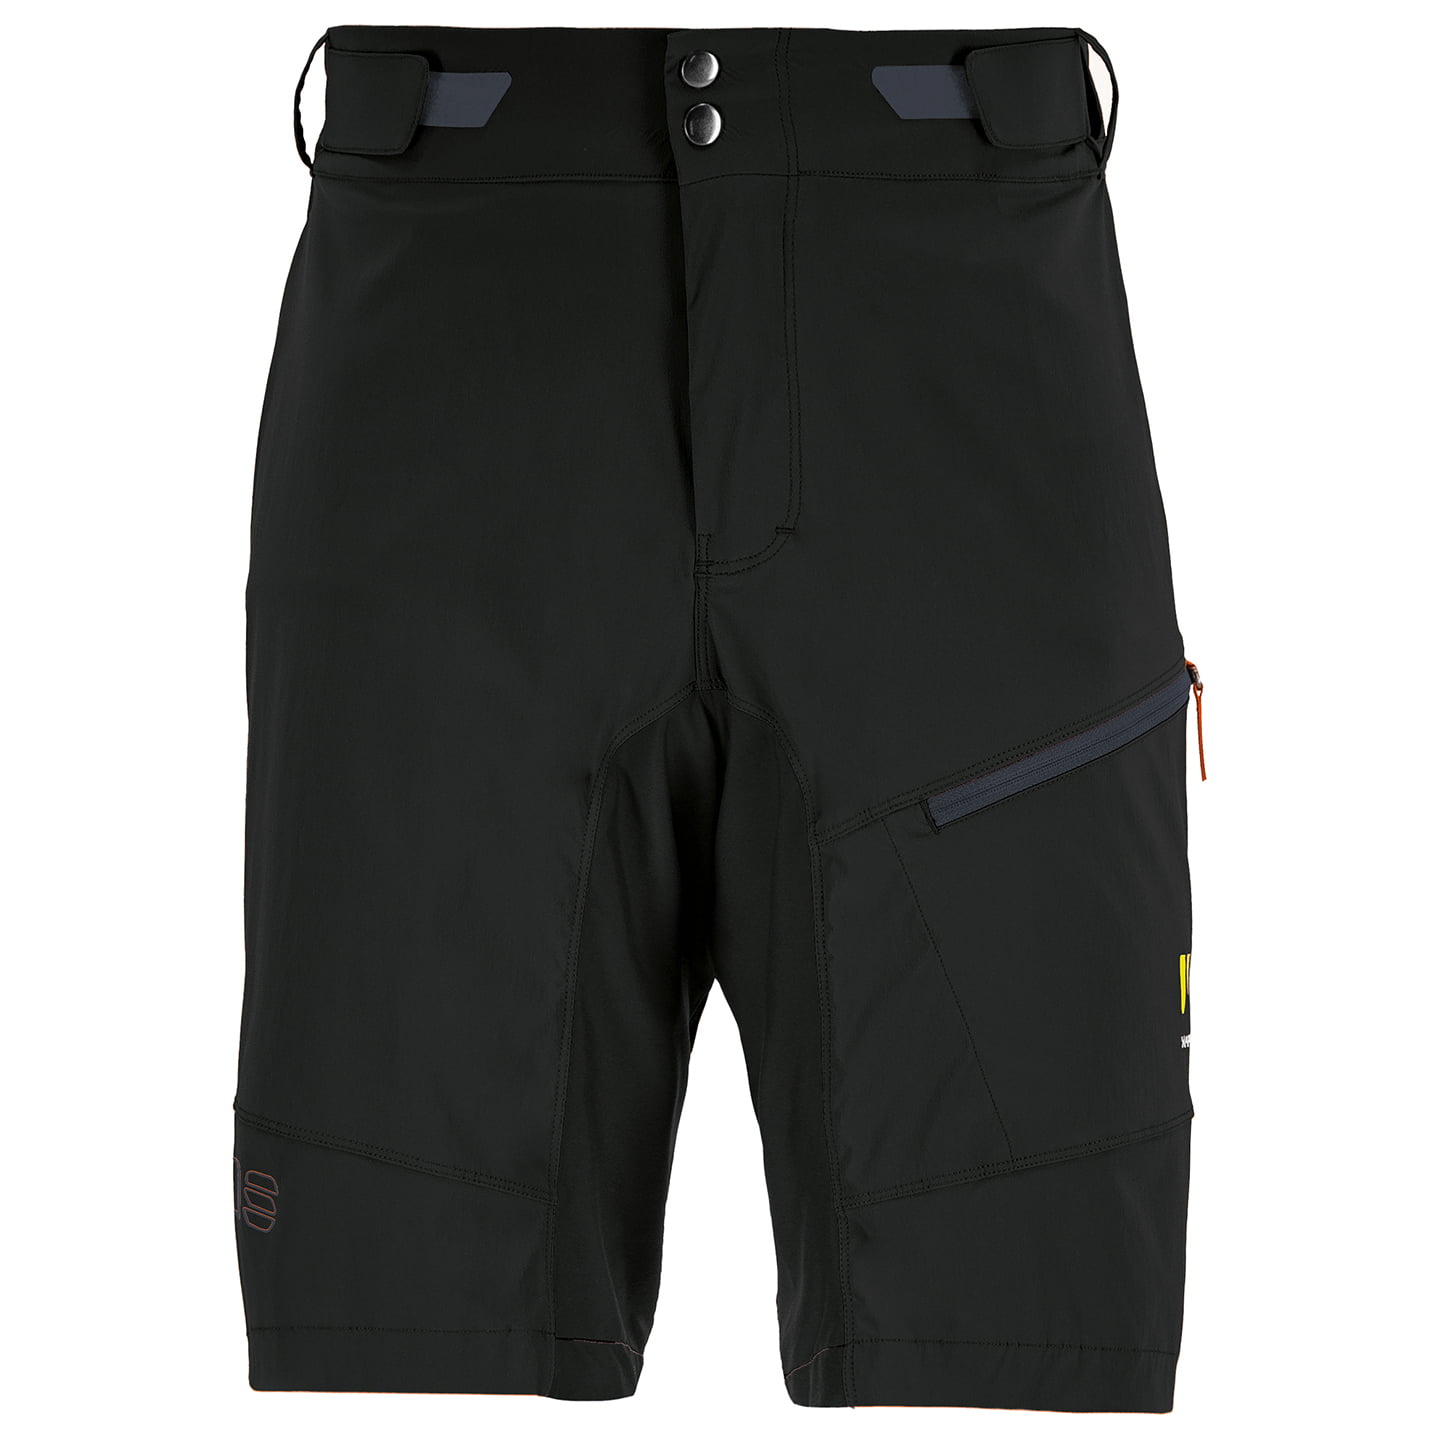 KARPOS Val Viola w/o Pad Bike Shorts, for men, size M, MTB shorts, MTB clothing